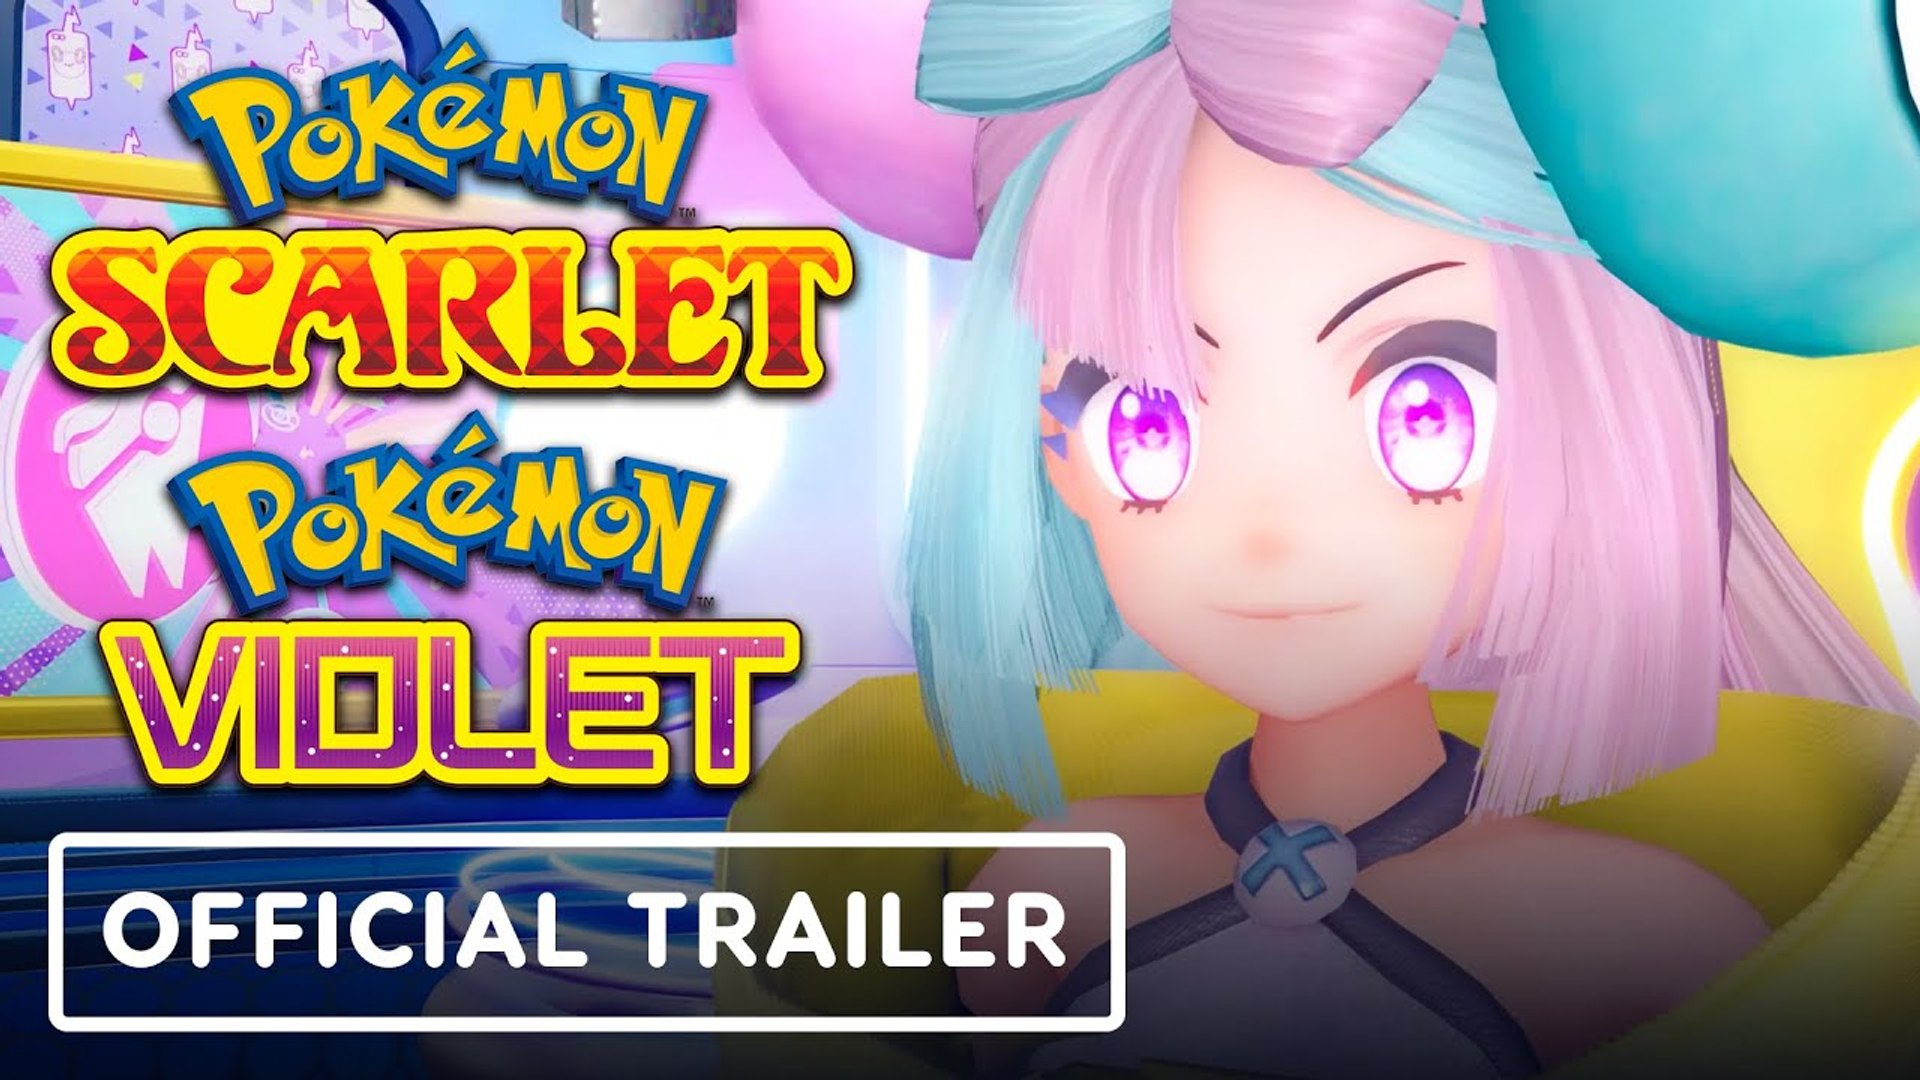 Pokemon Scarlet and Violet: Guess Gym Leader Iono's Partner Pokemon Trailer